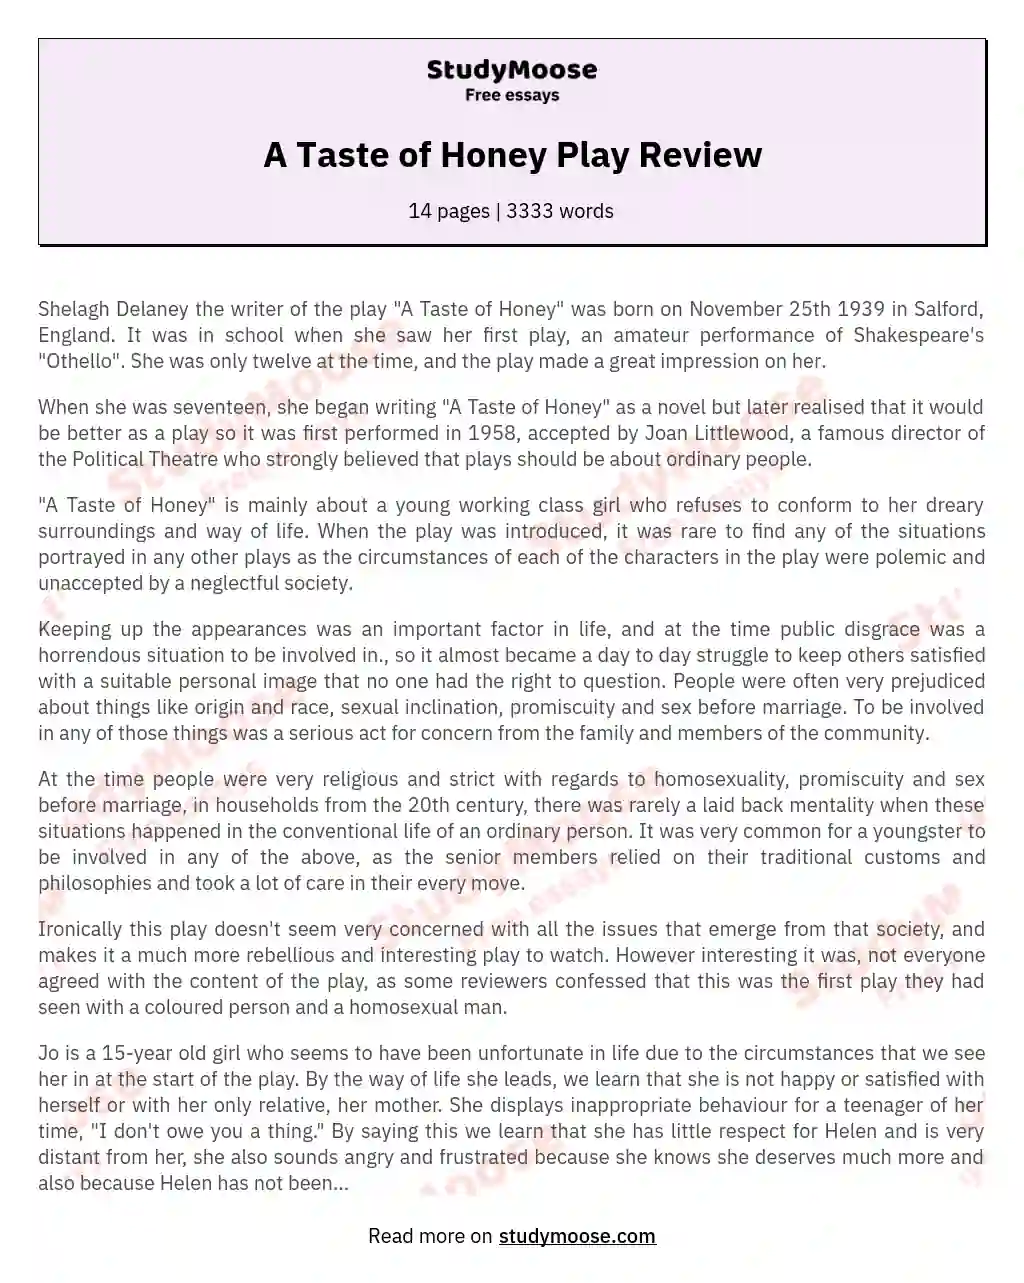 A Taste of Honey Play Review essay